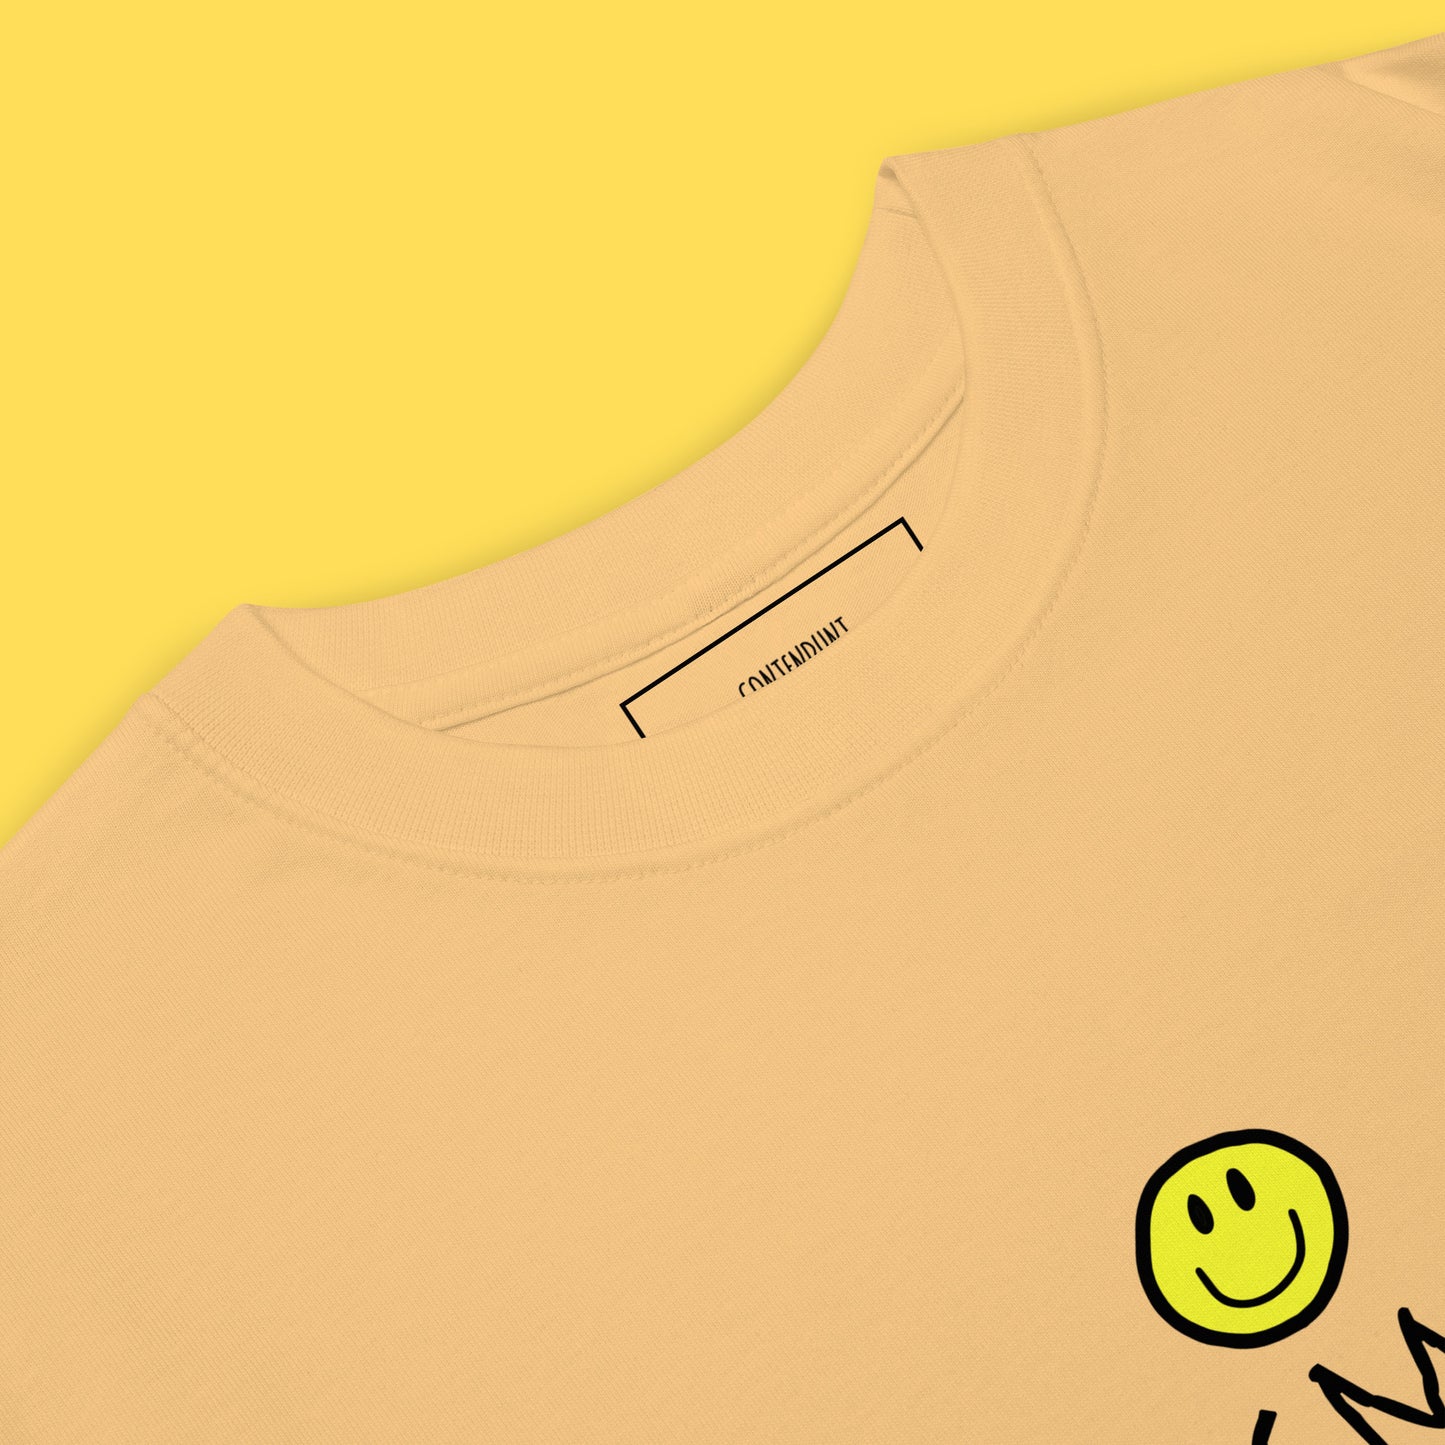 Stay Smiling Tshirt (Smile Yellow)